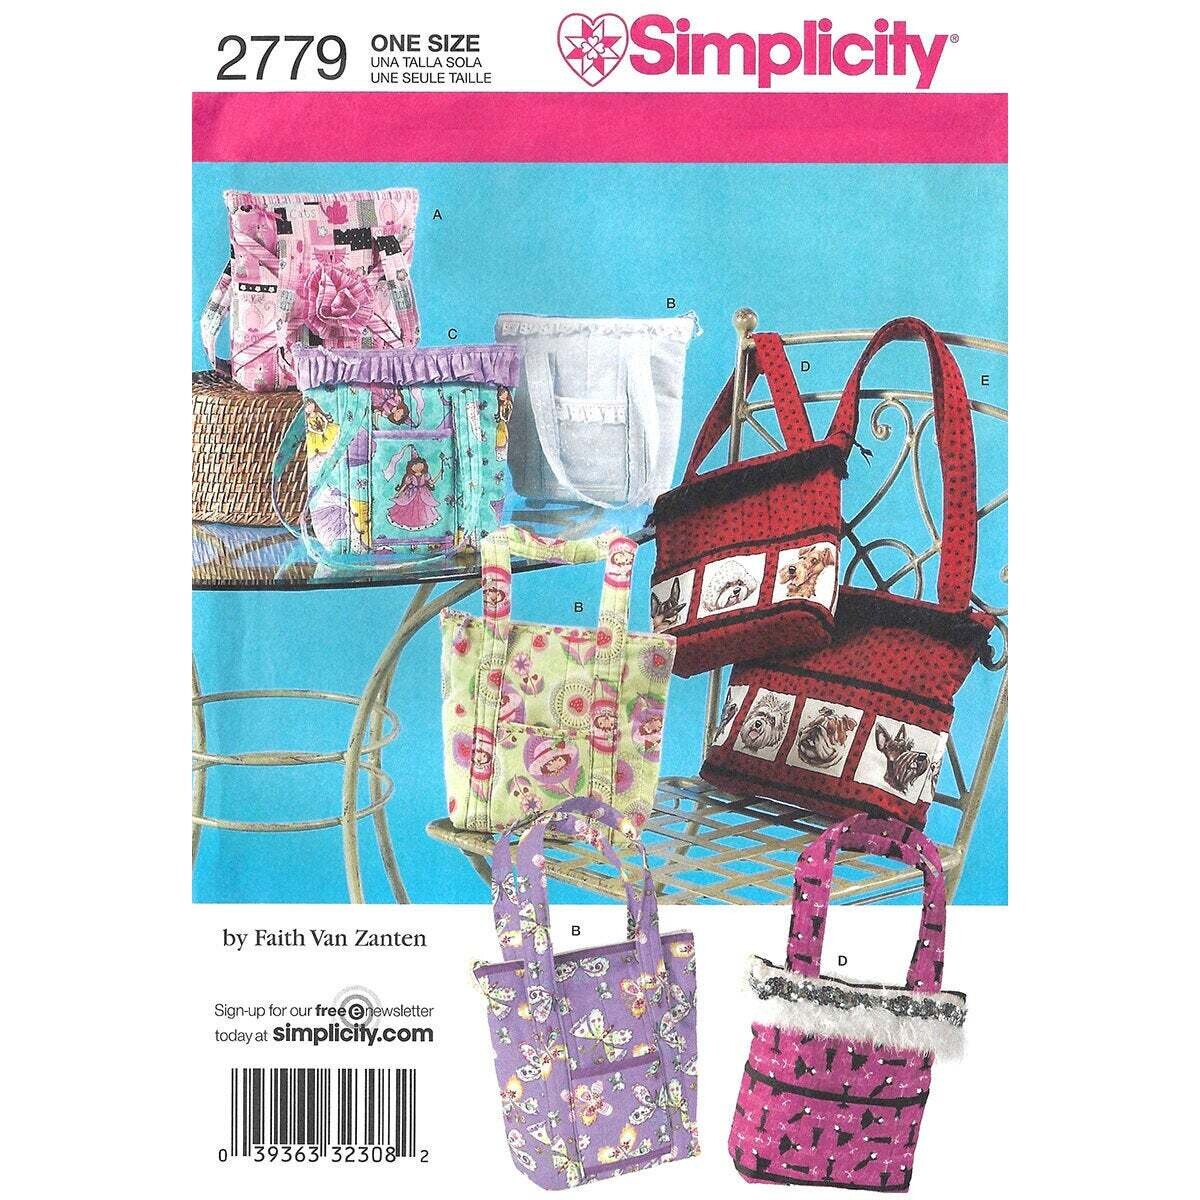 Simplicity 2779 Girls Bags Pattern Sleepover Bag, Tote, Zip Purse